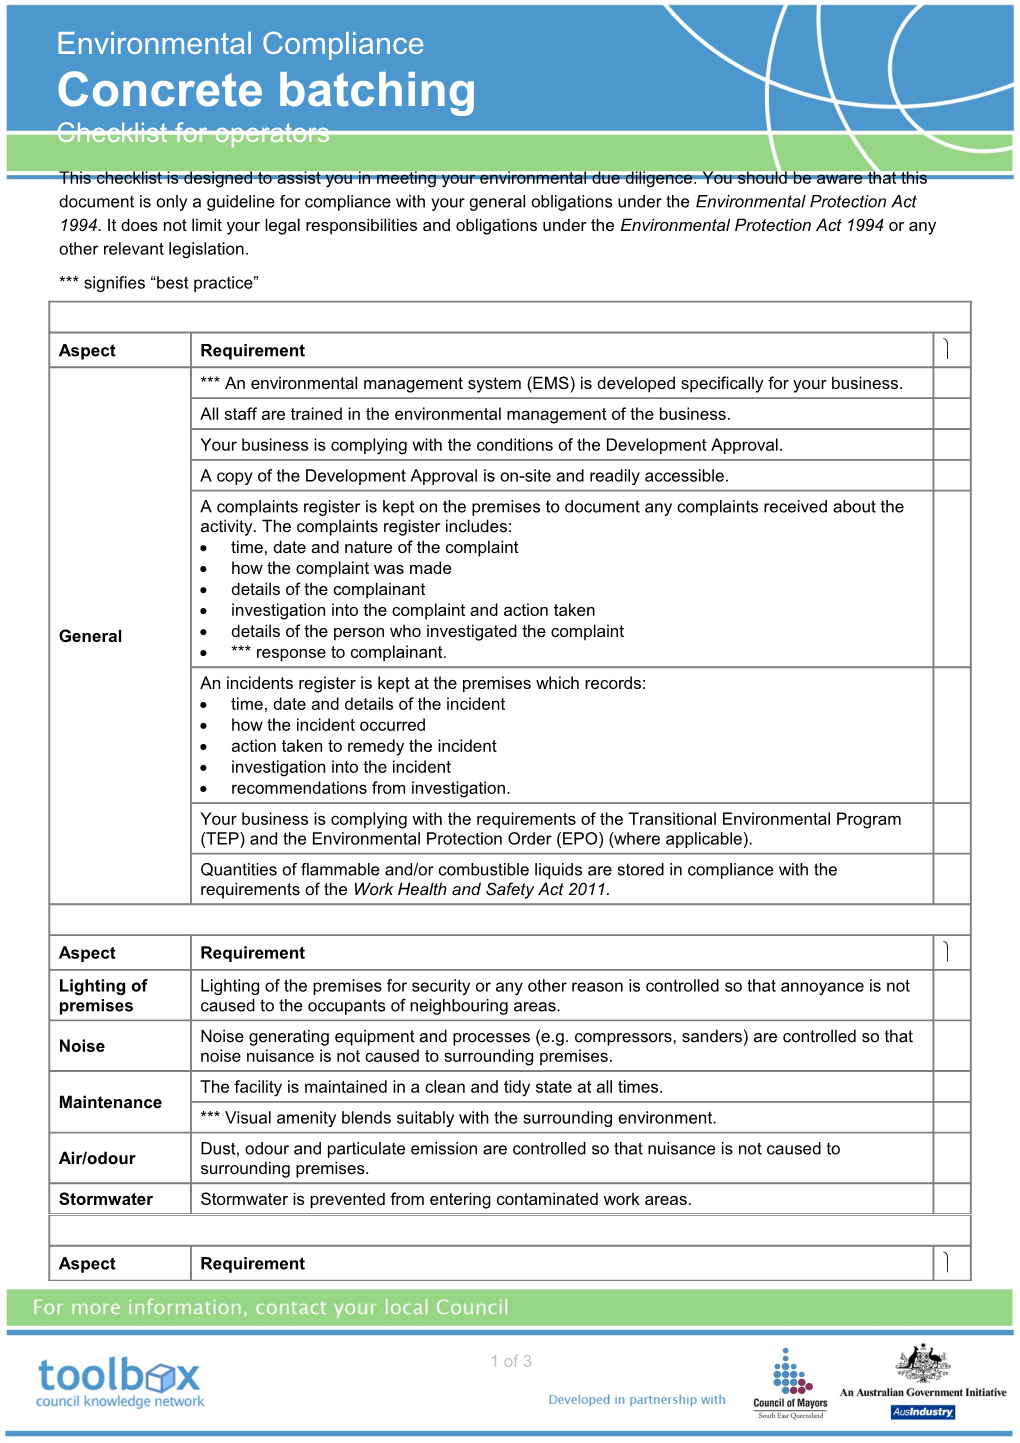 Operator Self Assessment Checklist - Concrete Batching